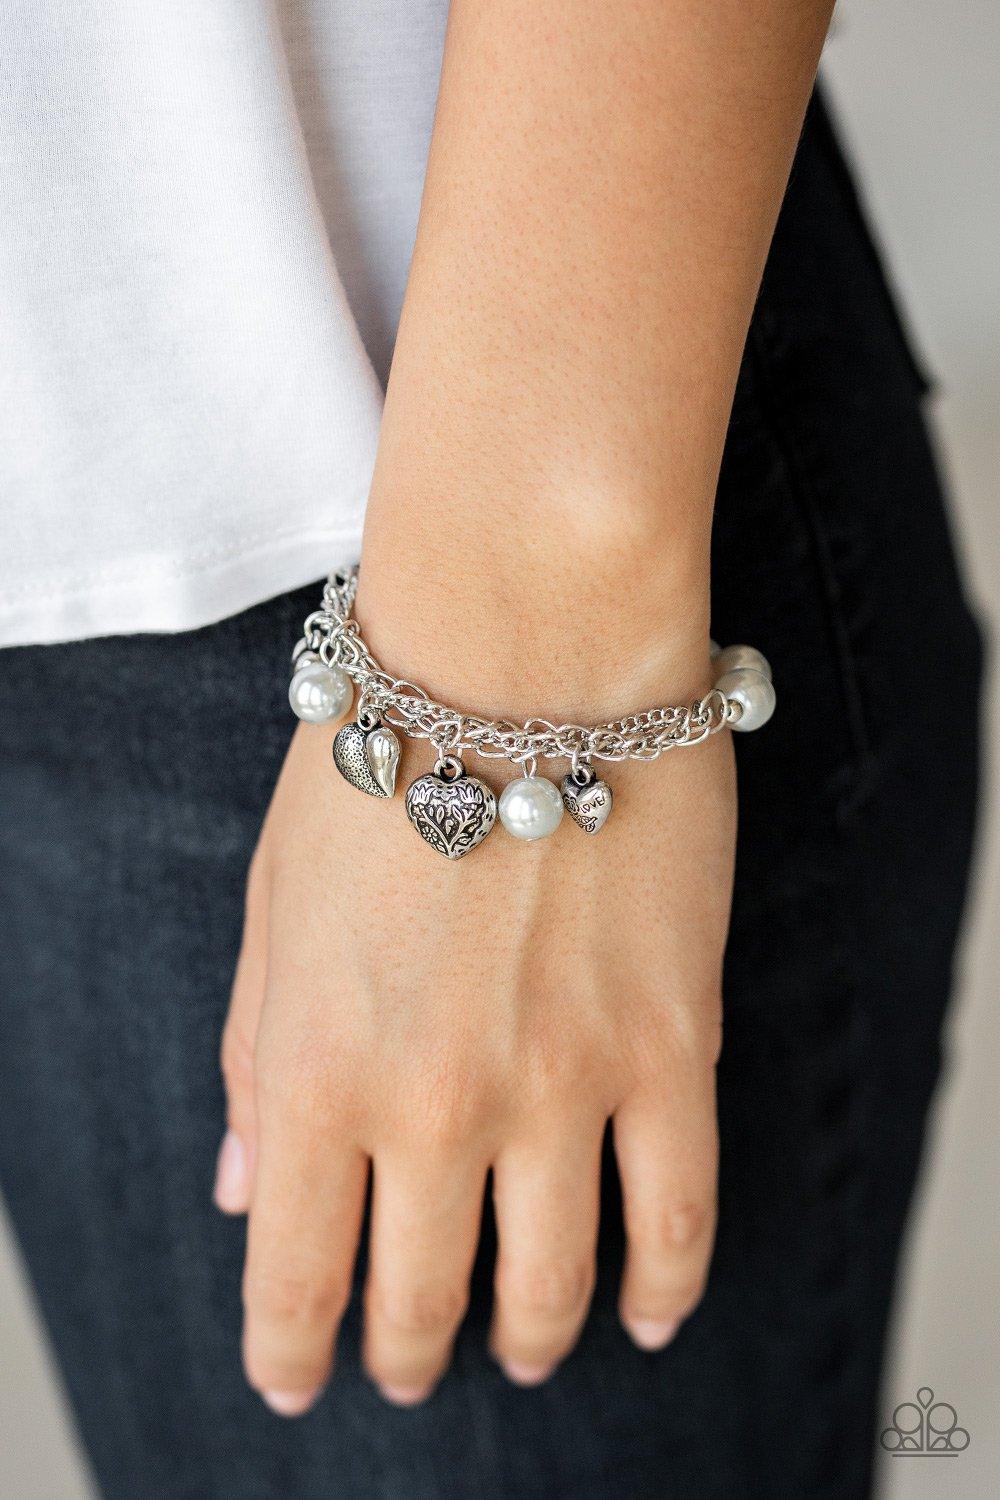 More Amour Silver Bracelet -  Jewelry by Bretta